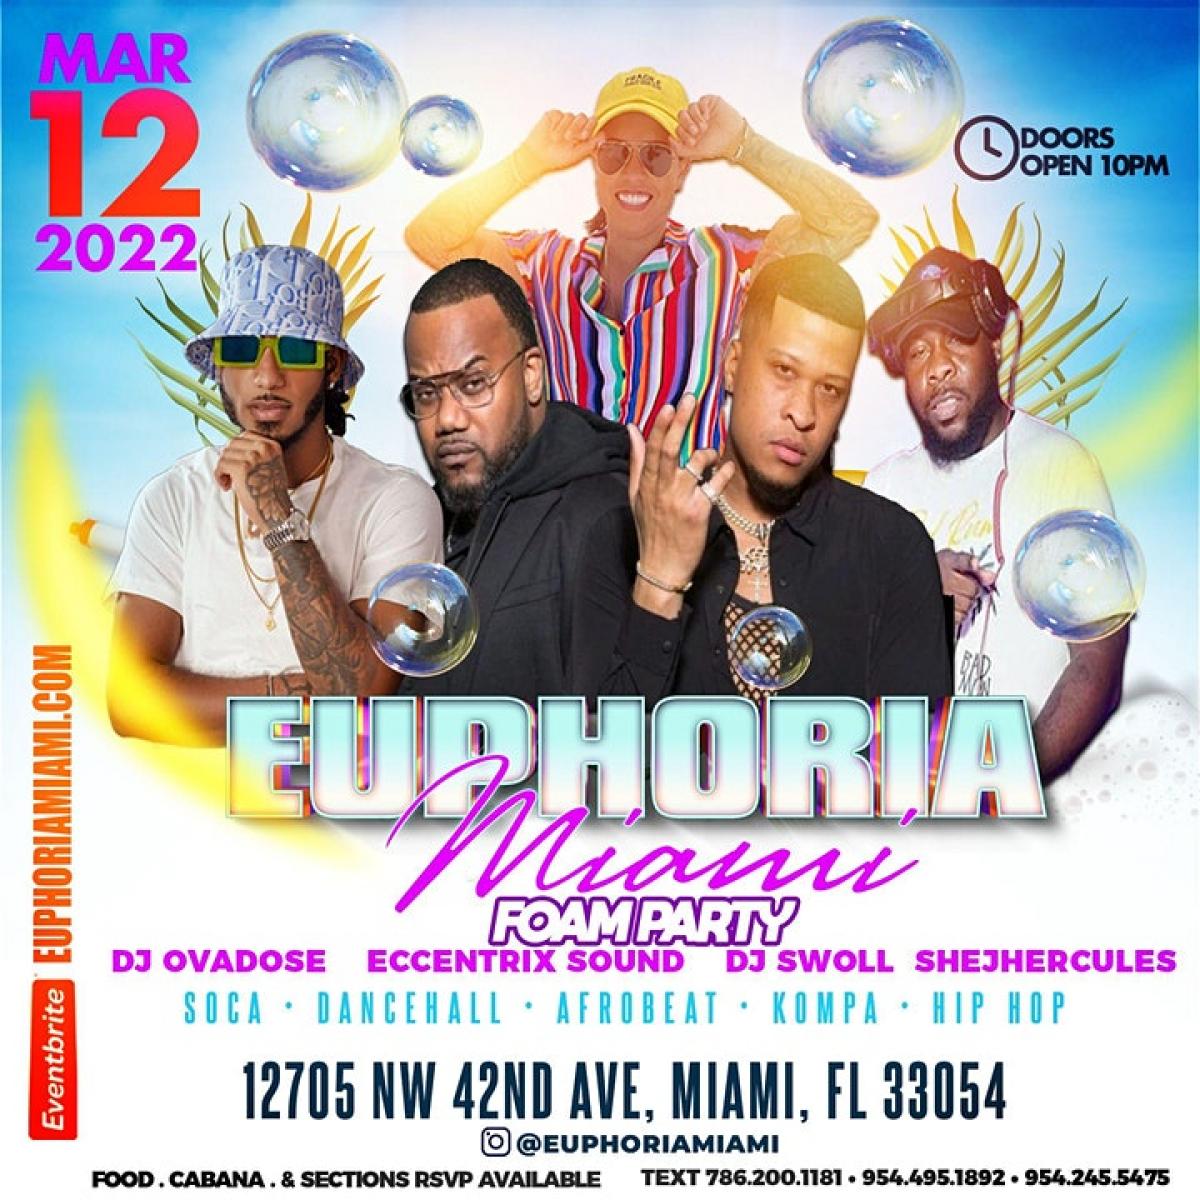 Euphoria Miami  flyer or graphic.